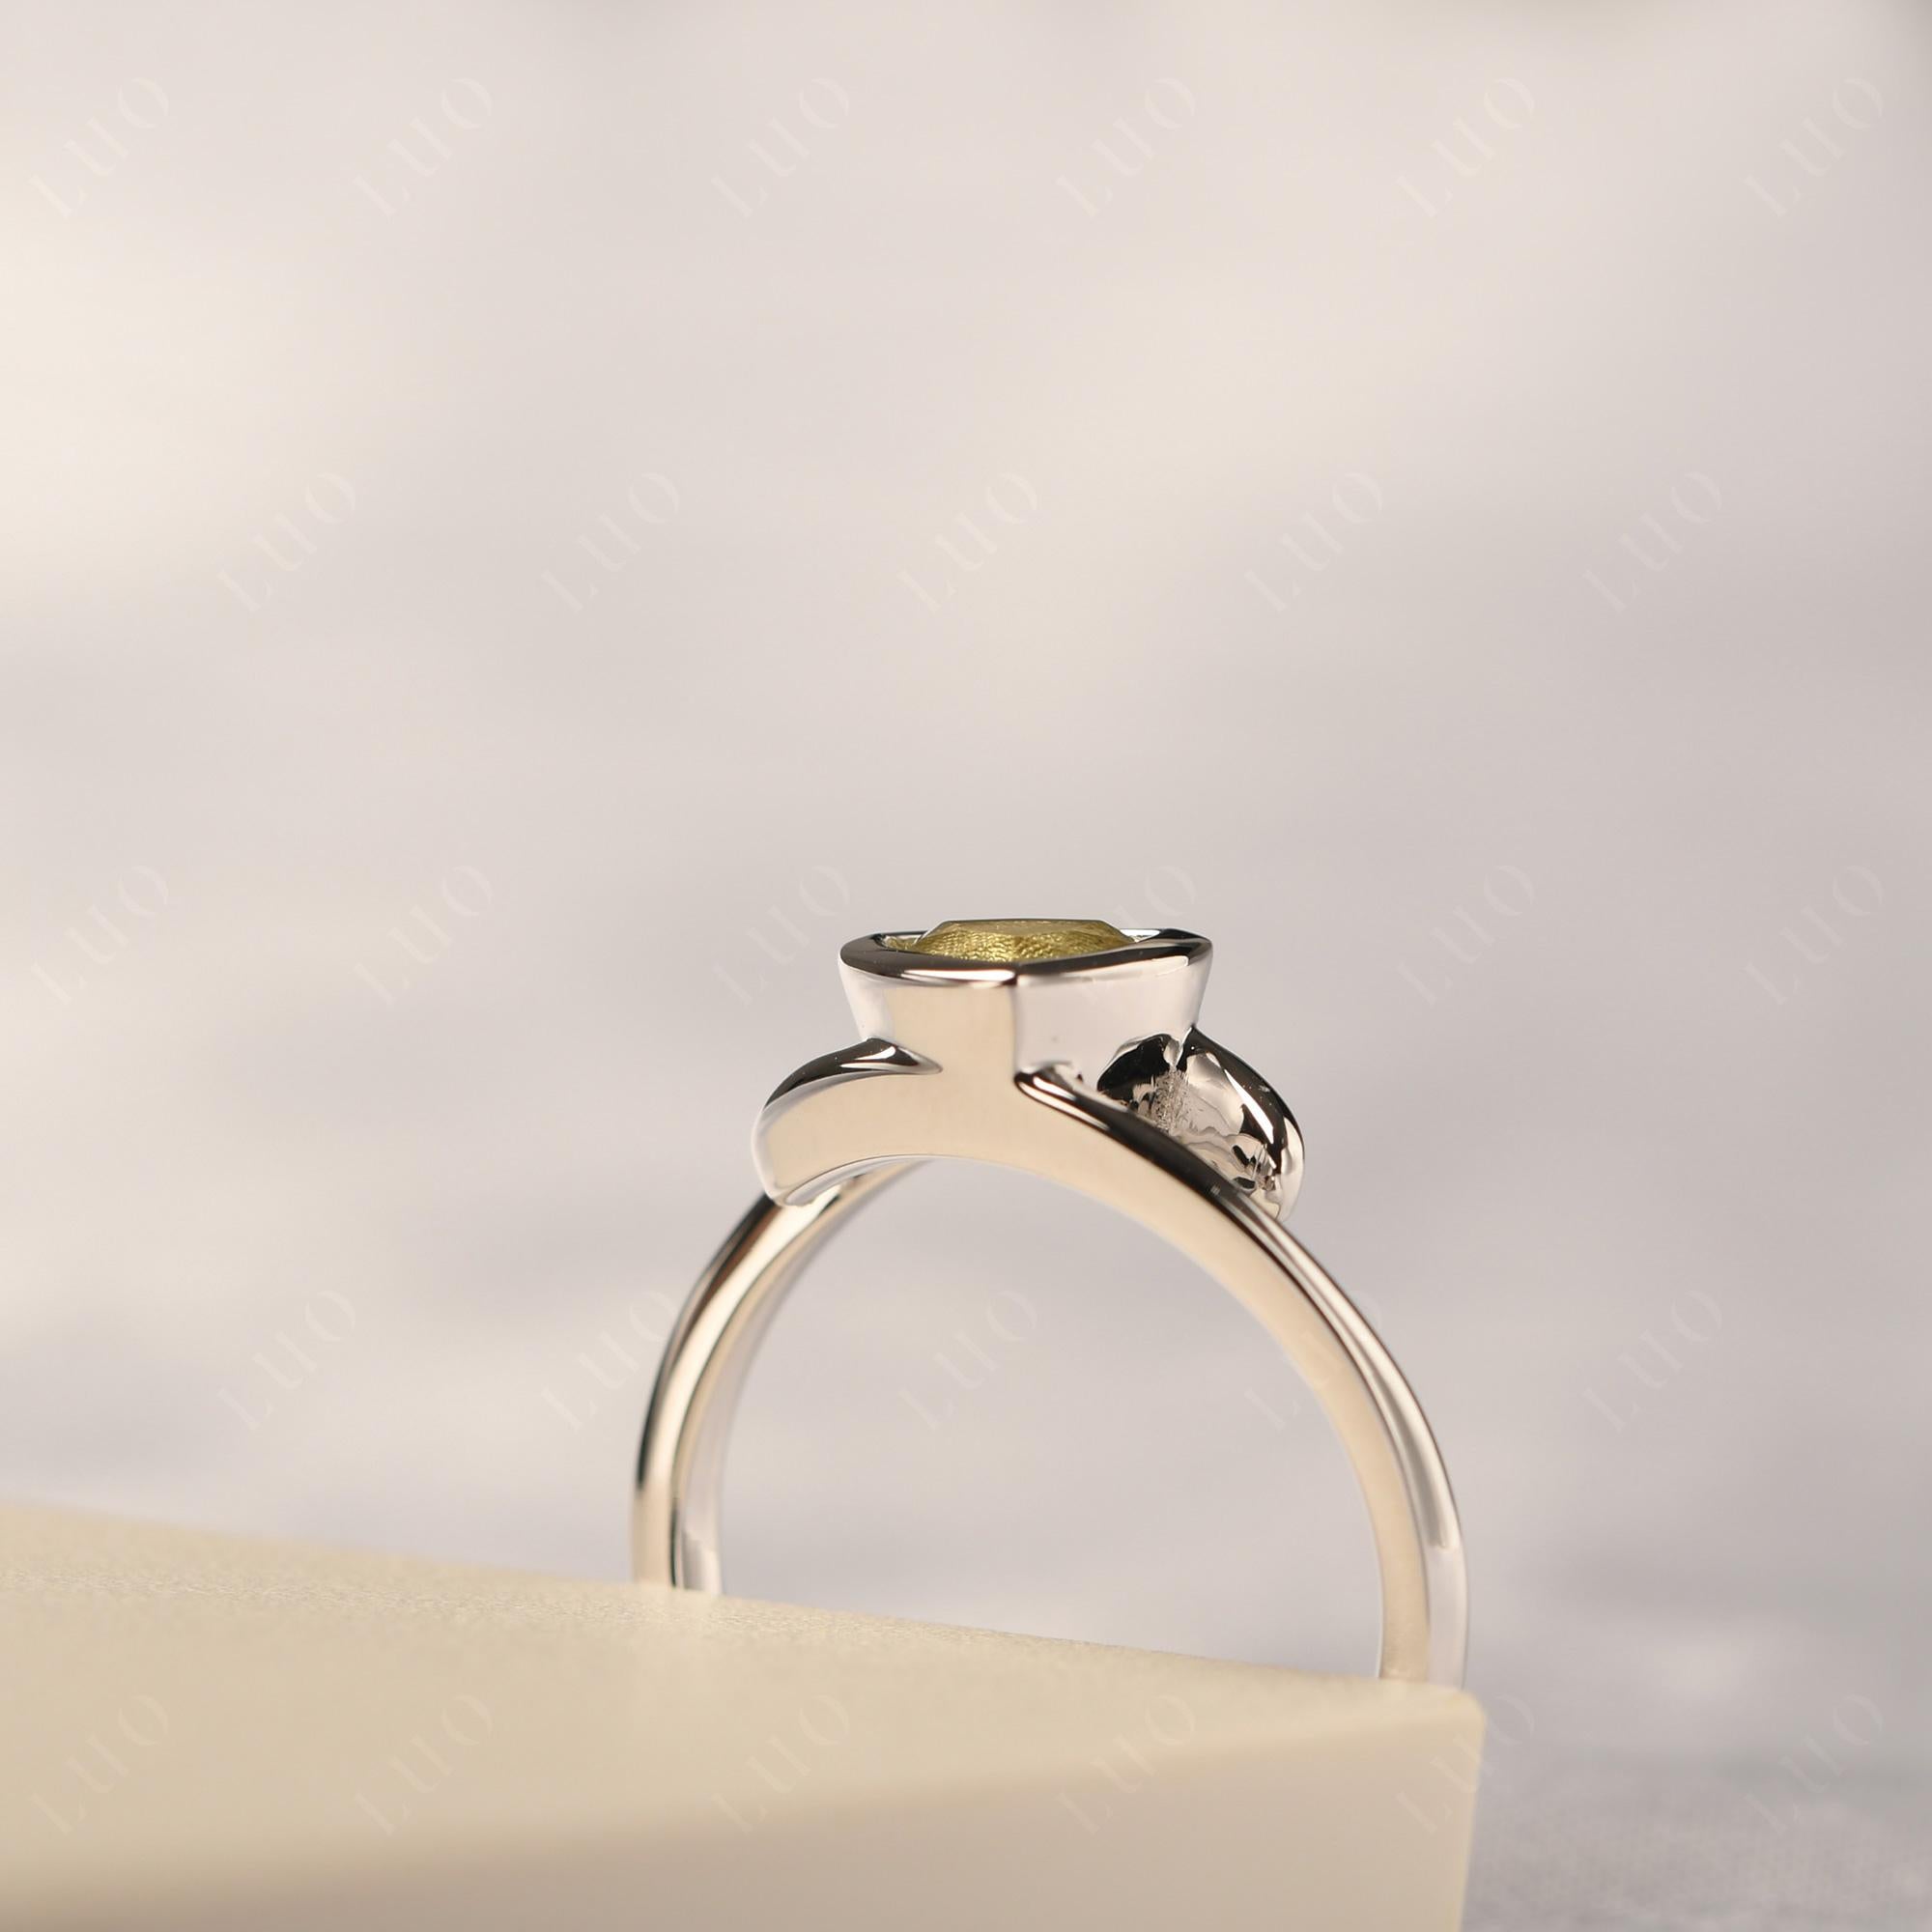 Lemon Quartz Bezel Set Bypass Solitaire Ring - LUO Jewelry